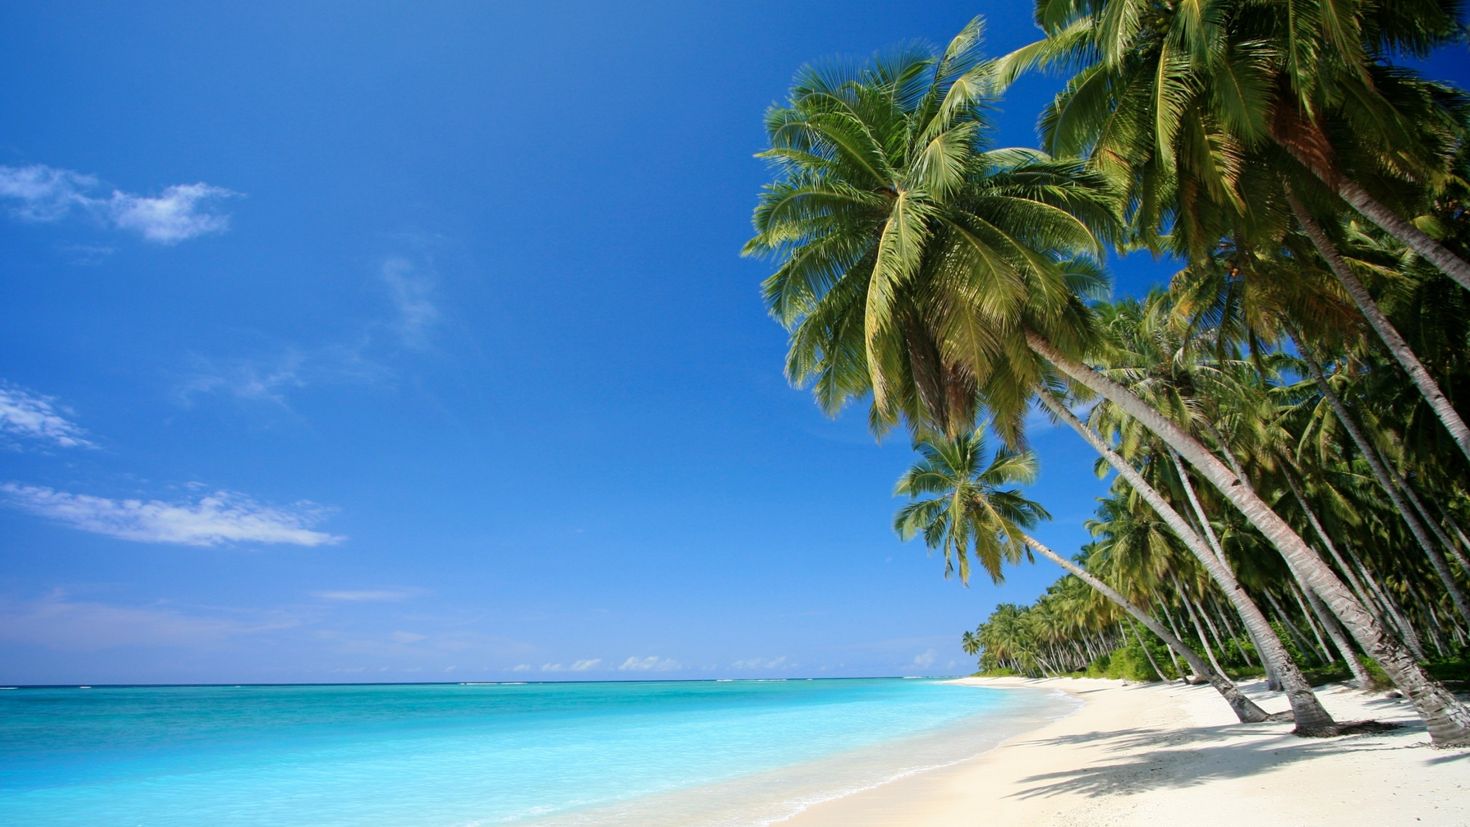 фото берега моря с пальмами